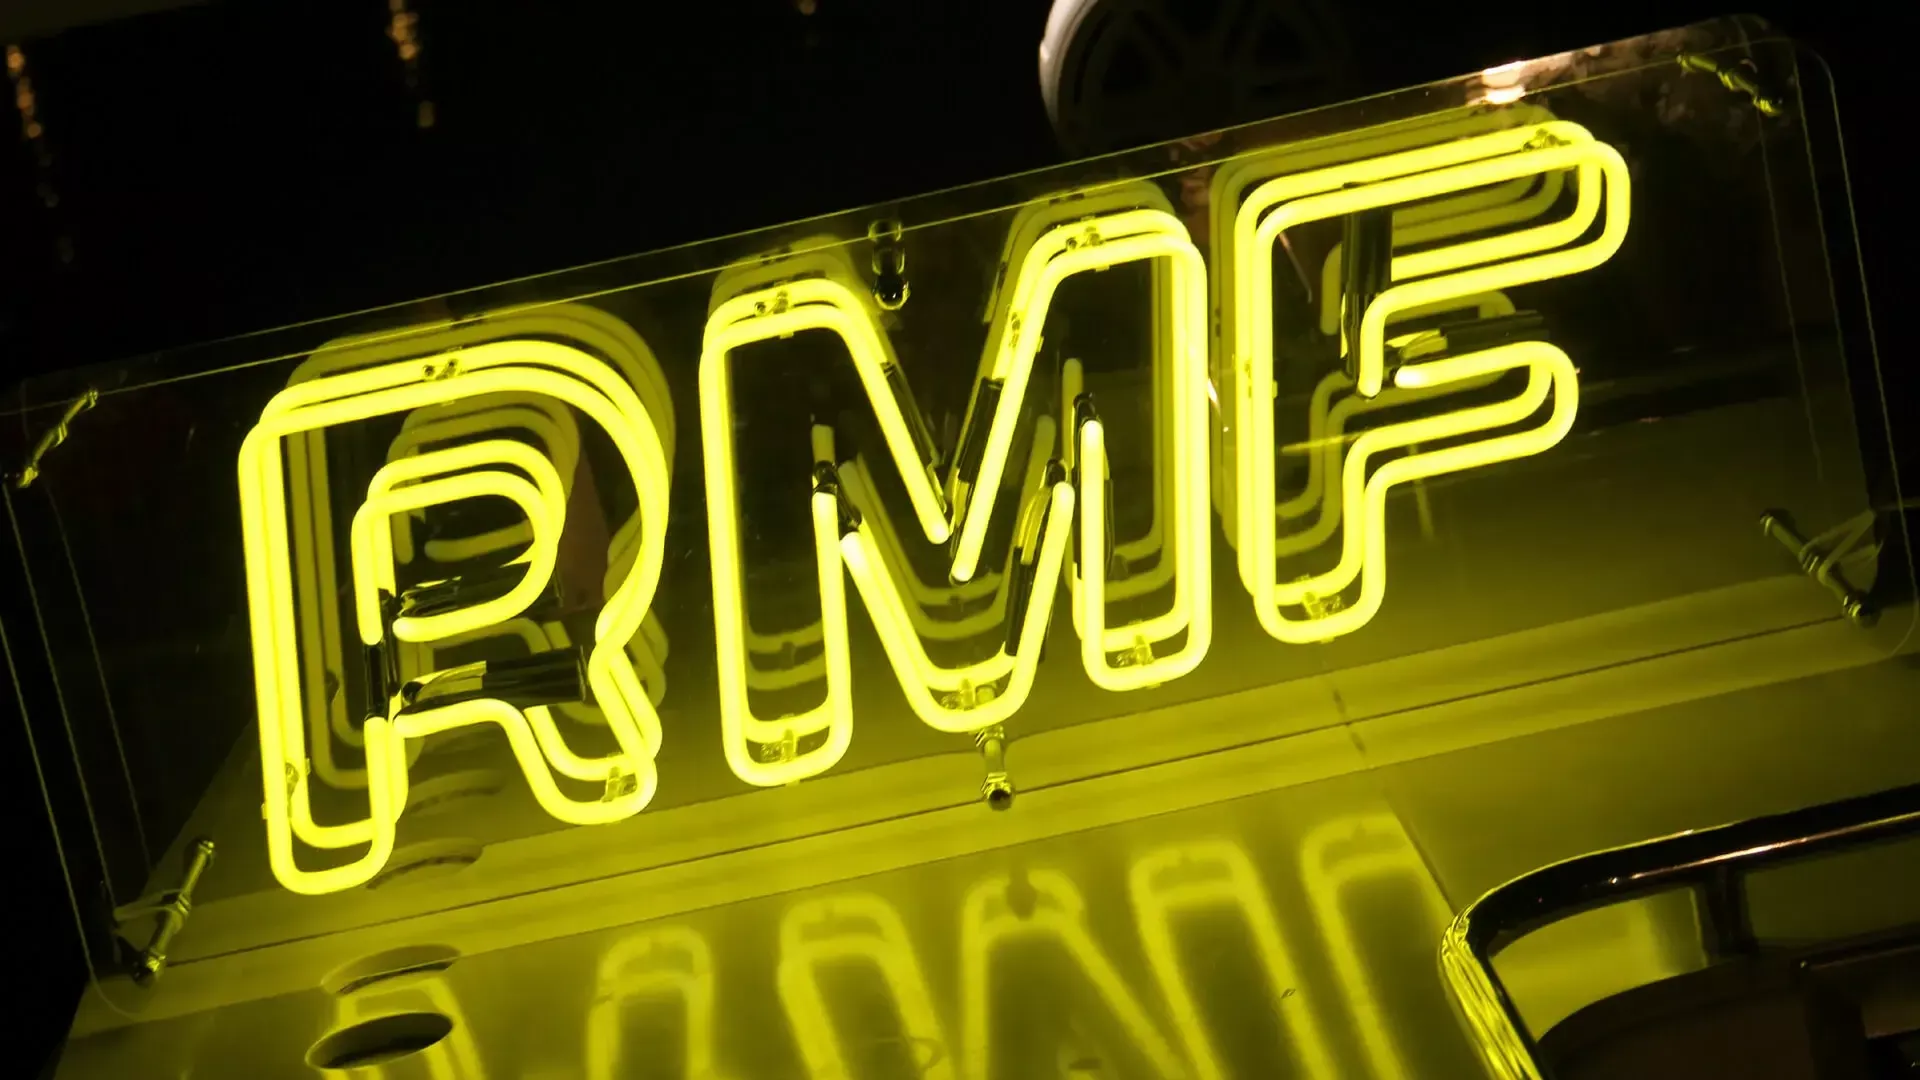 RMF - Yellow neon sign for RMF Radio, neon advertisement.